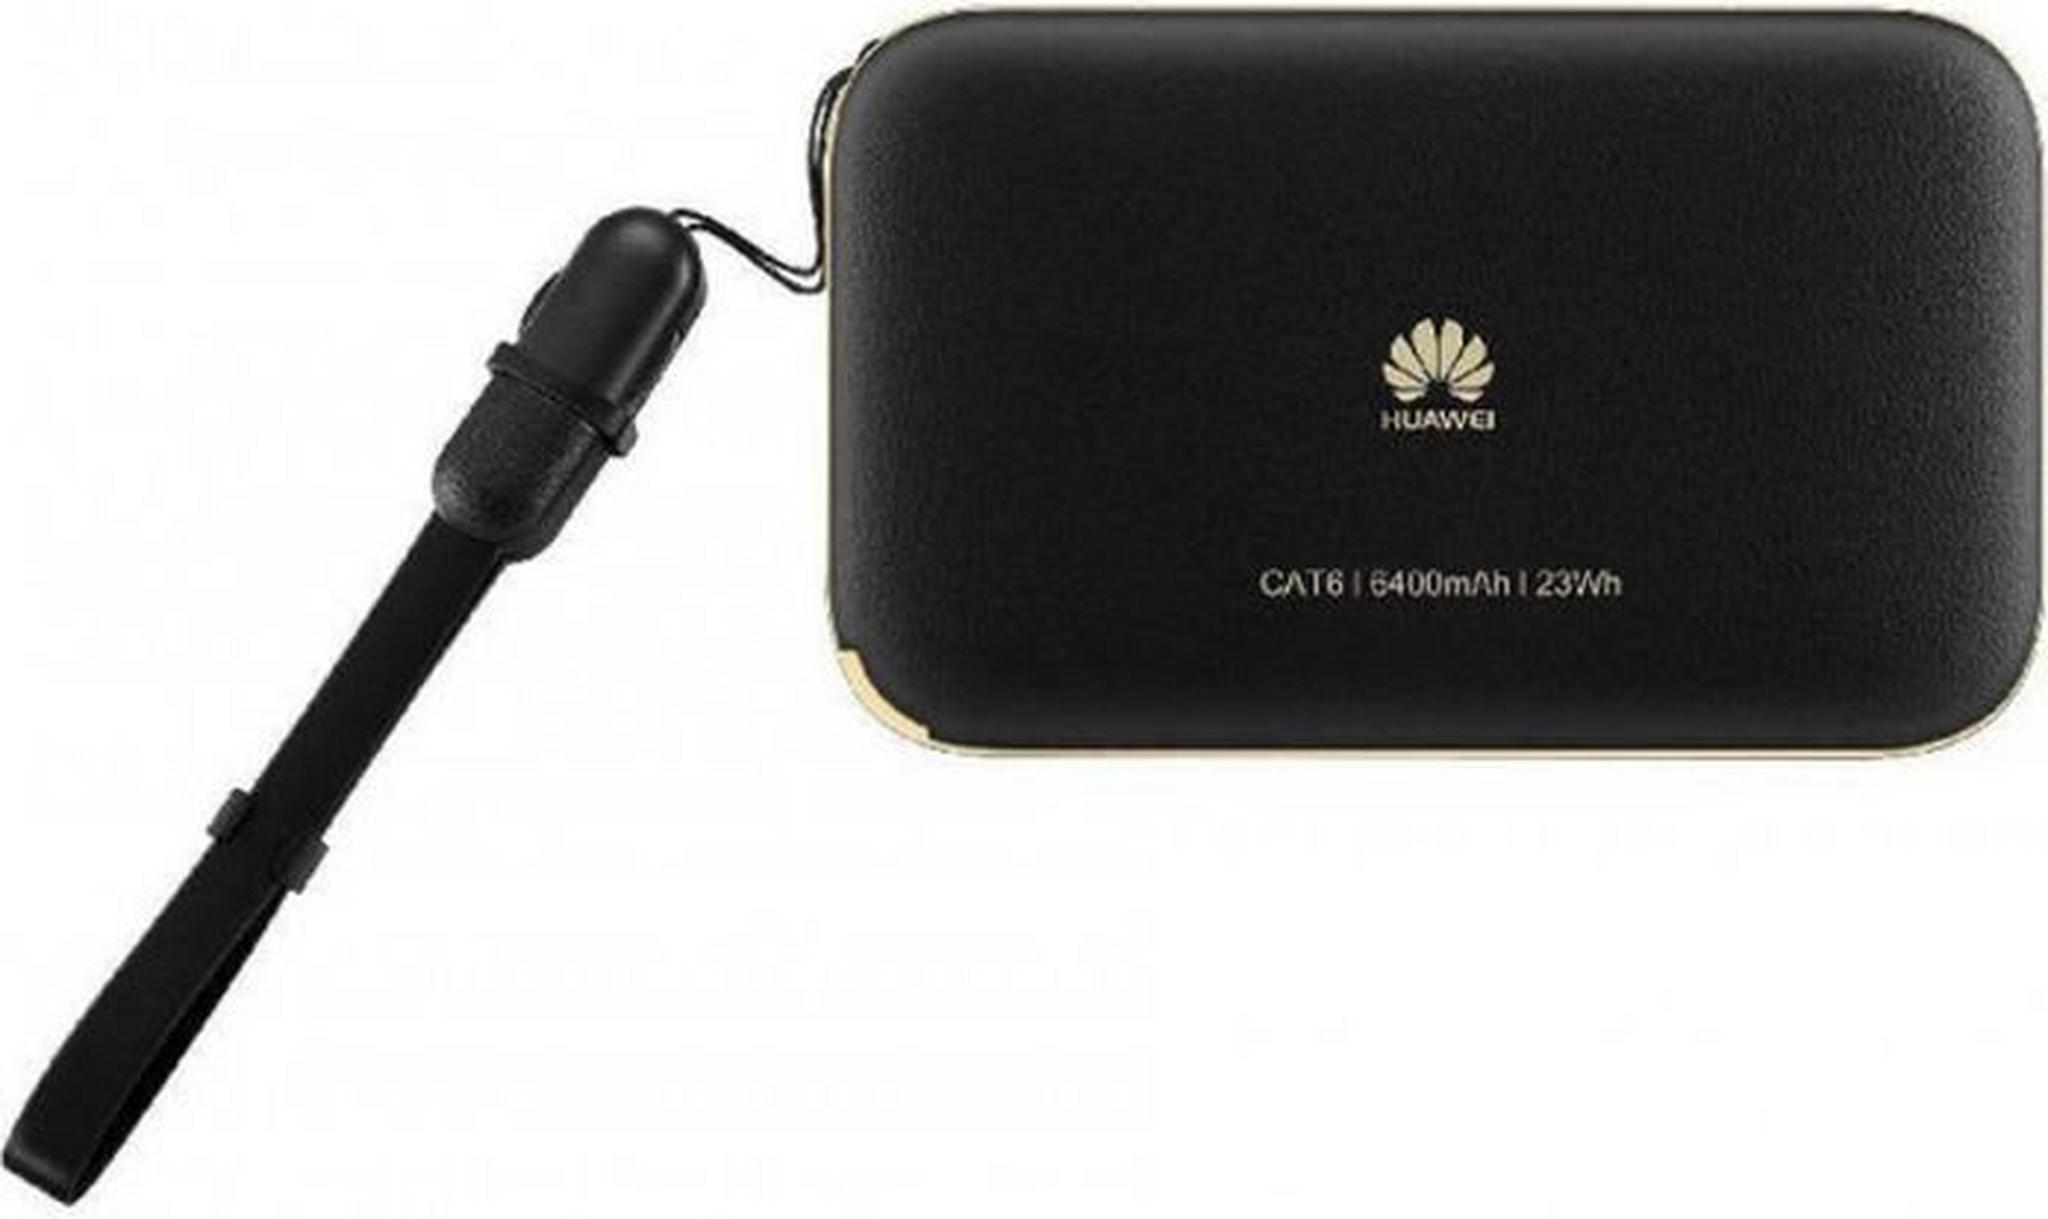 Huawei Pro 2 Mobile WiFi (E5885LS) - Black/Gold